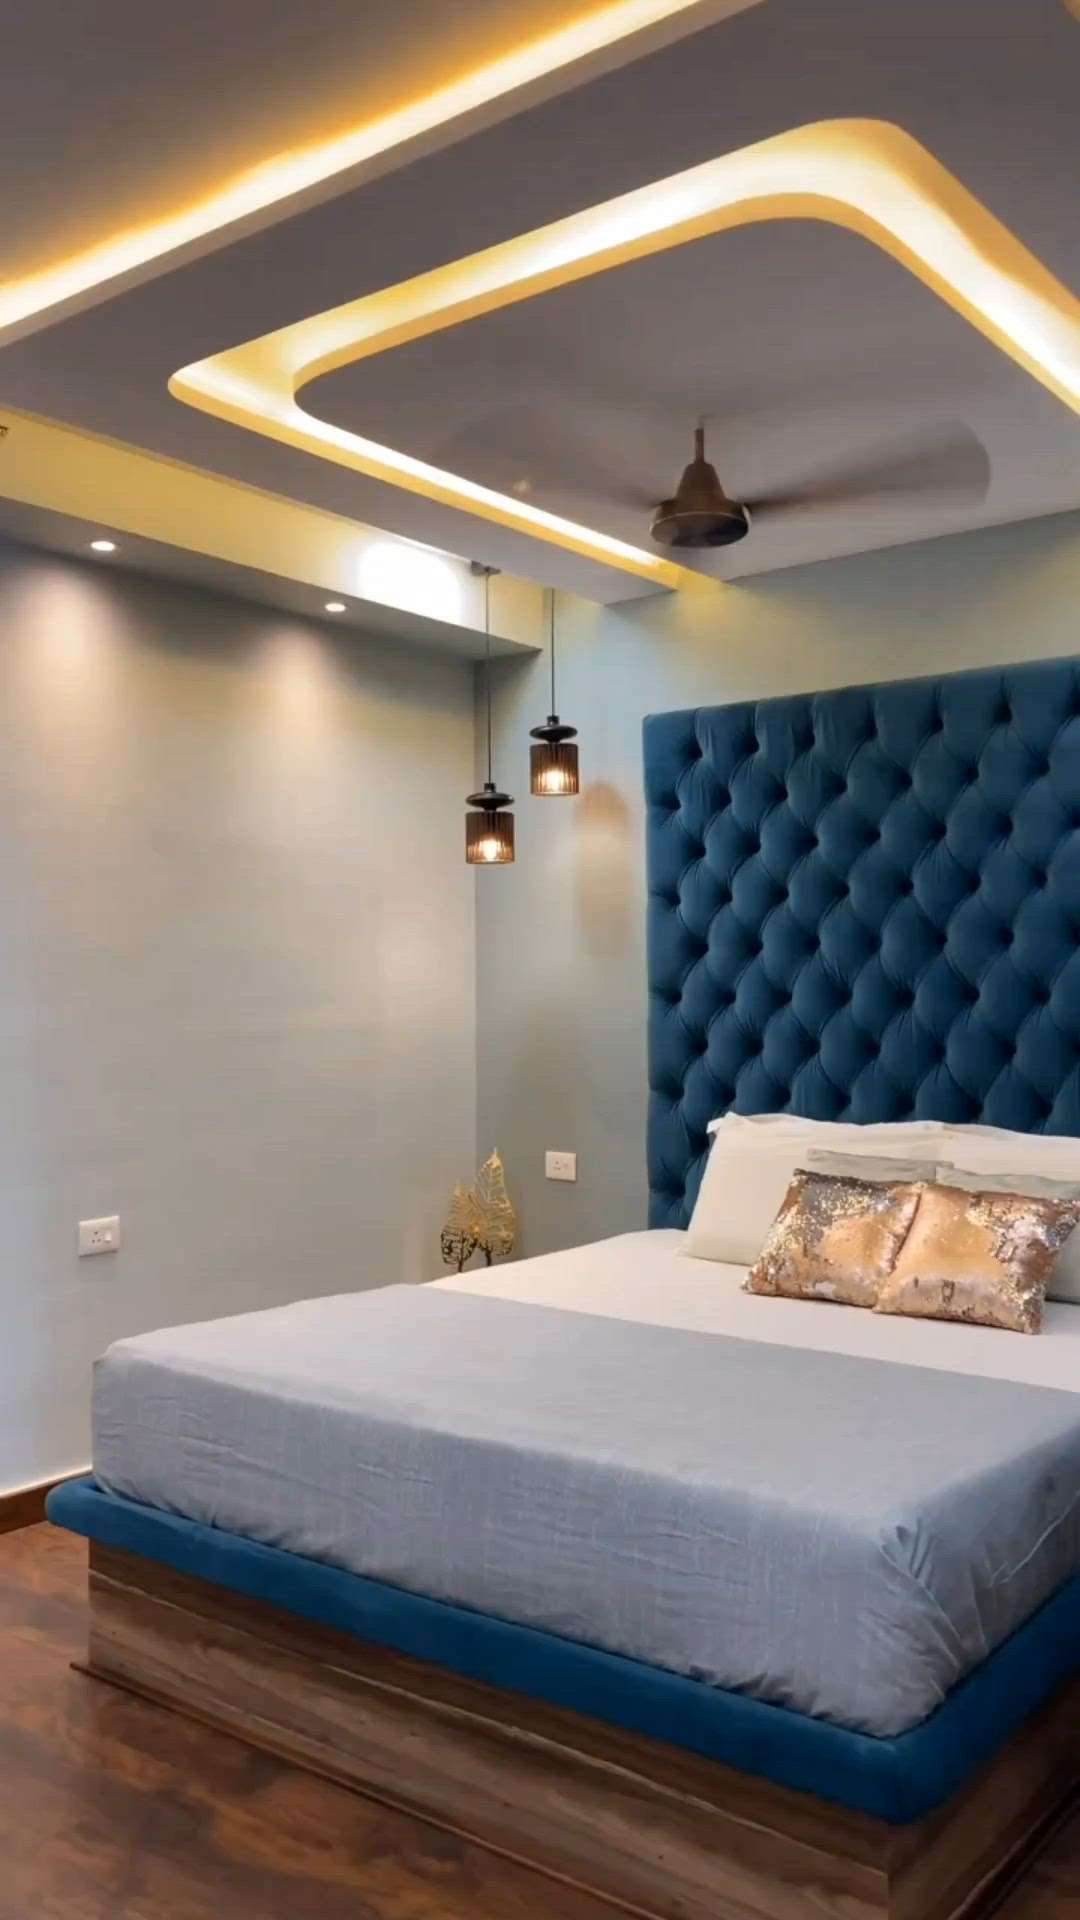 the best bedroom interior design ideas to suit your style. #InteriorDesigner #roomdesign #roomdecoration #LivingRoomSofa #roomtable #roomdecore #falcelling #MasterBedroom #BedroomDesigns #BedroomIdeas #WardrobeIdeas #WardrobeDesigns #SlidingWindows #SlidingDoorWardrobe #CelingLights #StaircaseLighting #FlooringTiles #WoodenFlooring #Painter #hanginglights #WallDecors #WALL_PANELLING #tvcabinet #Delhihome #DelhiGhaziabadNoida #trendig